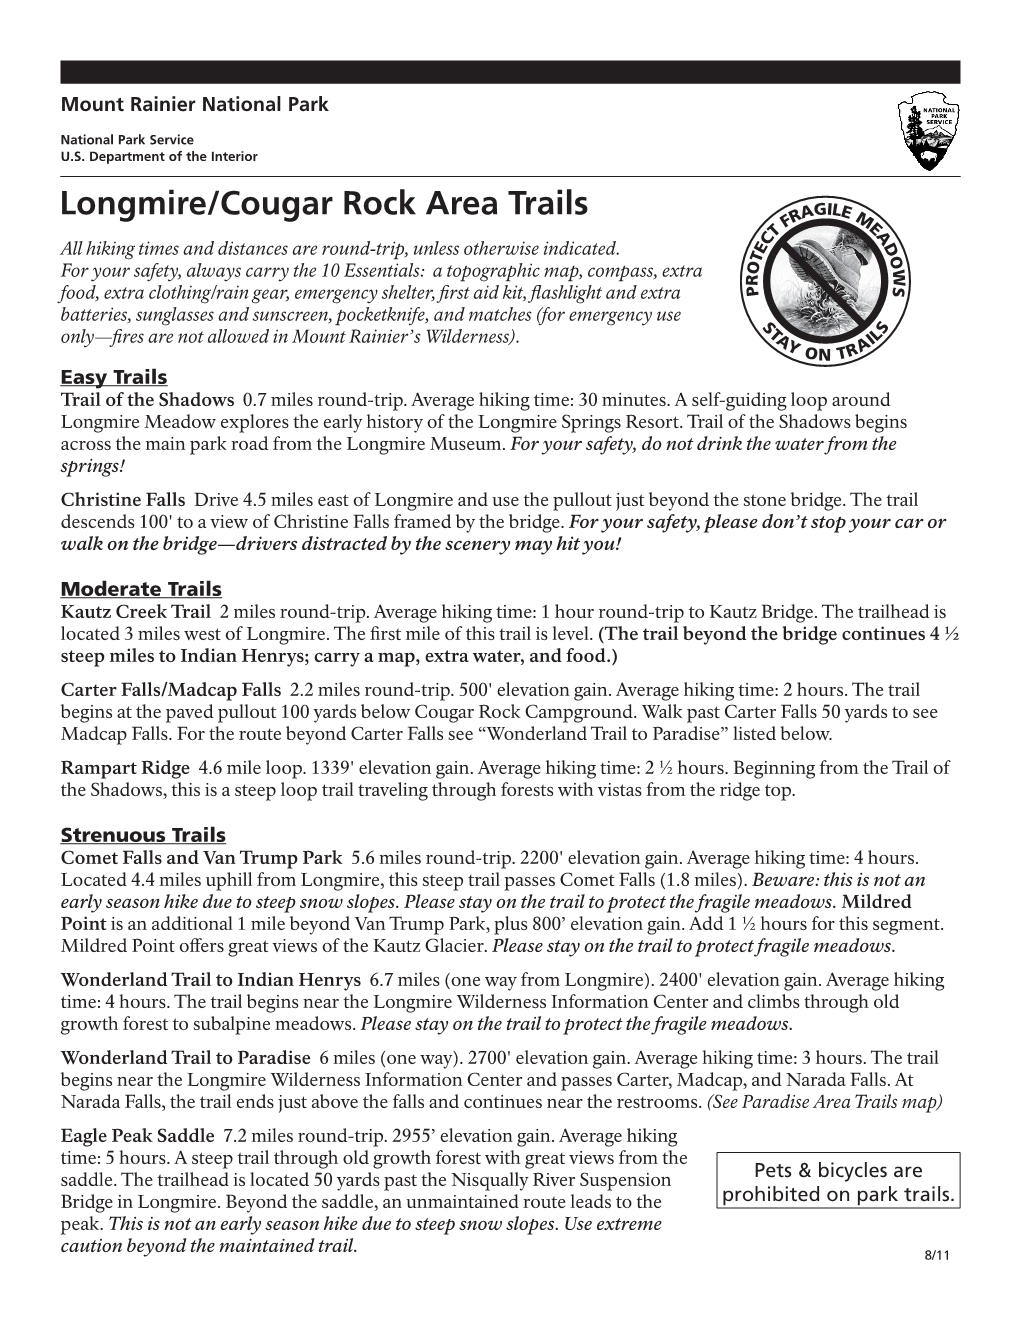 Longmire/Cougar Rock Area Trails